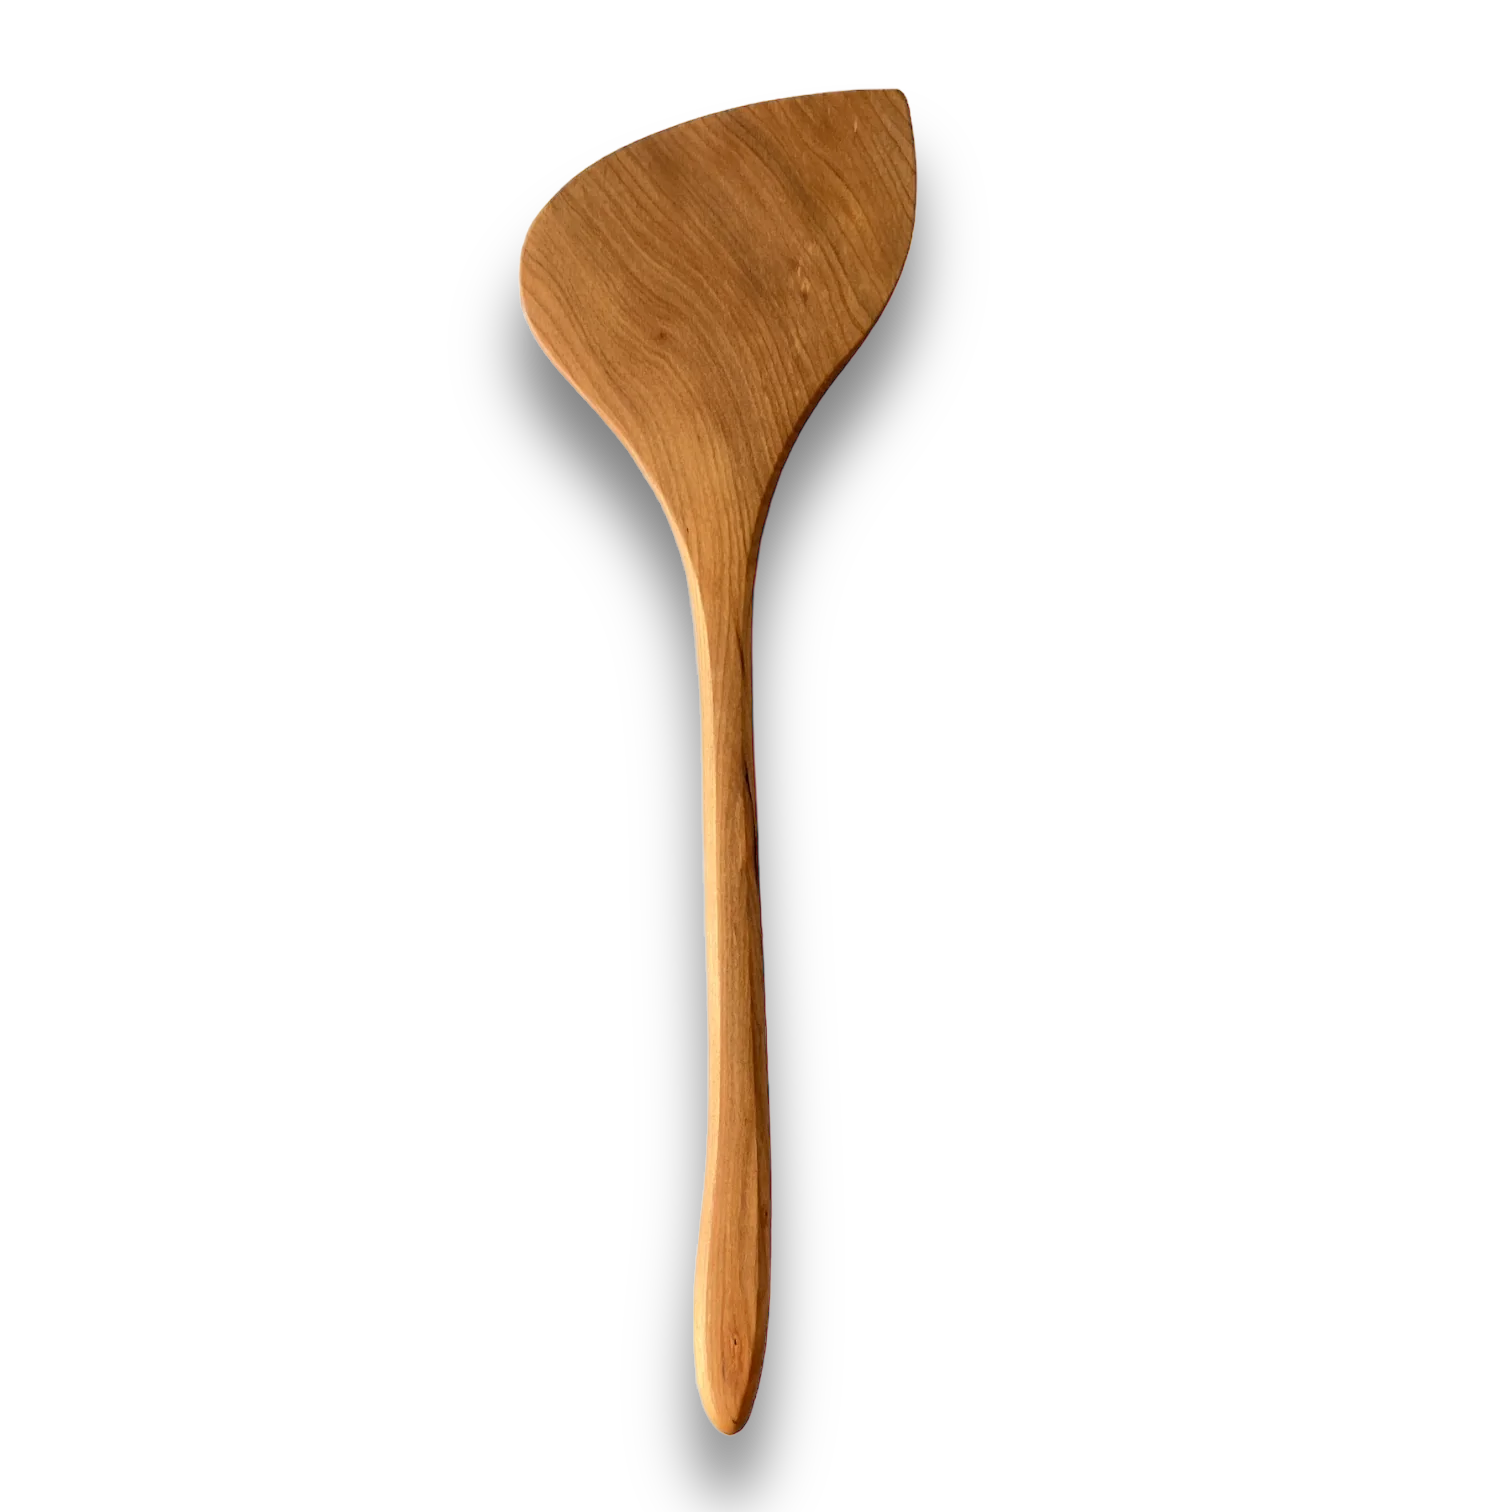 Handmade Wooden Kitchen Utensils, Thin Large Spatula